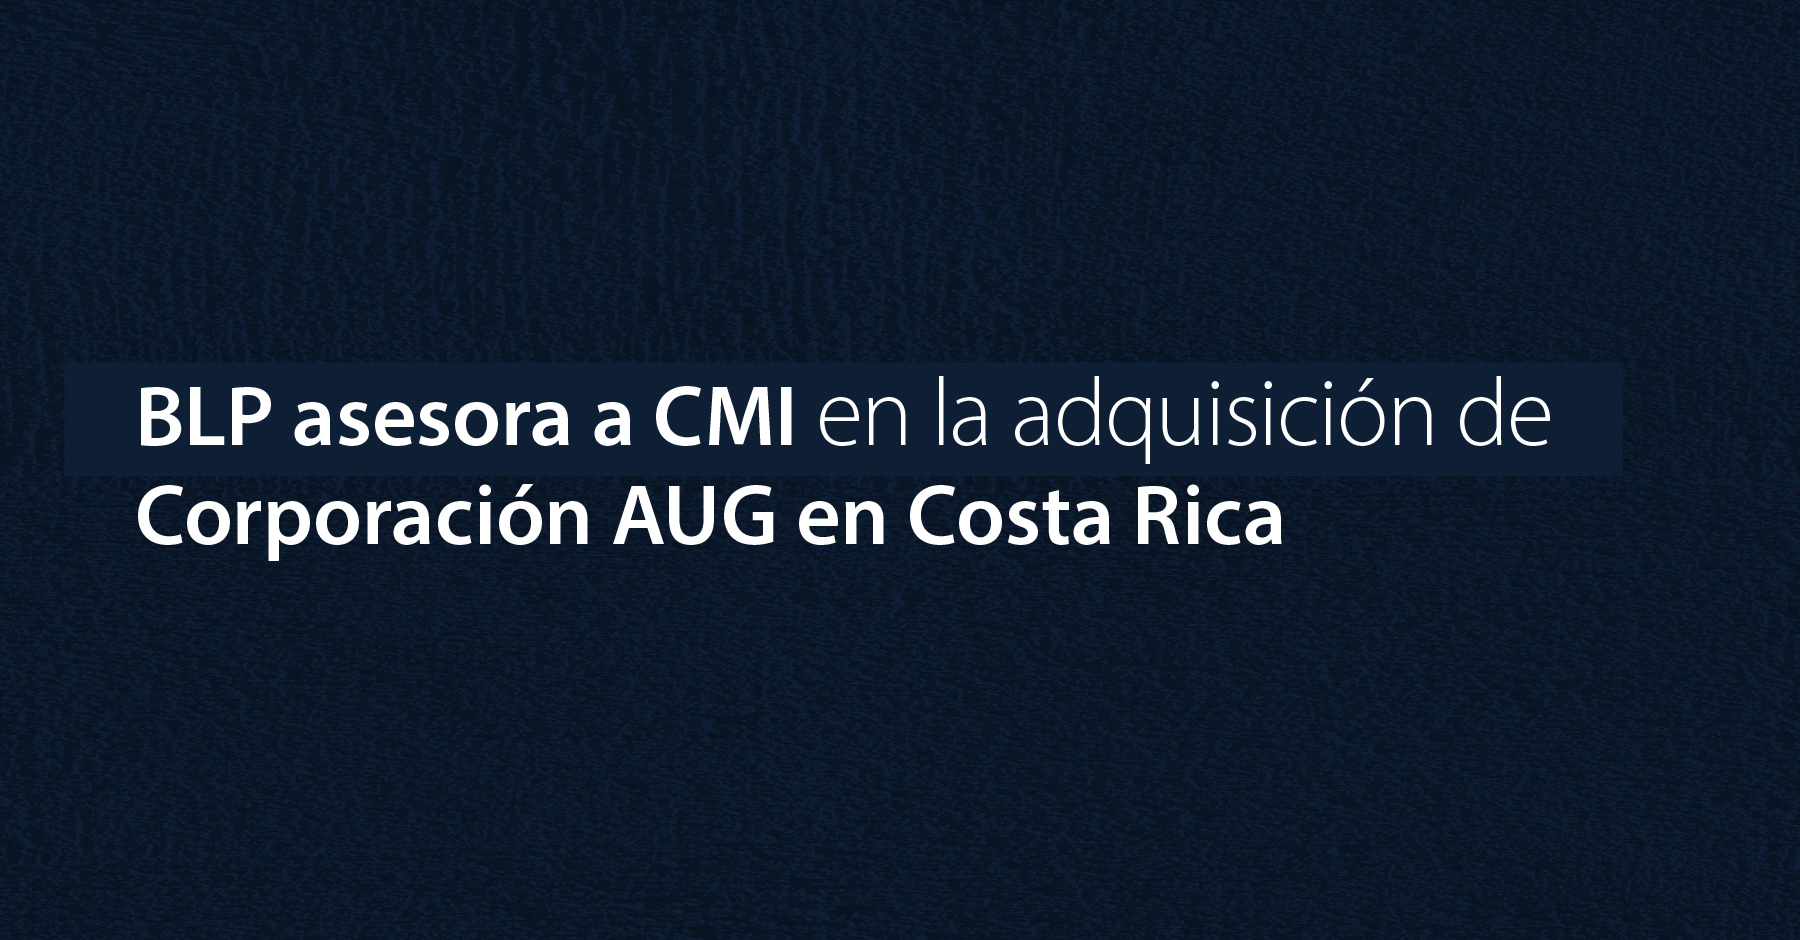 BLP asesora a CMI en la adquisición de Corporación AUG en Costa Rica